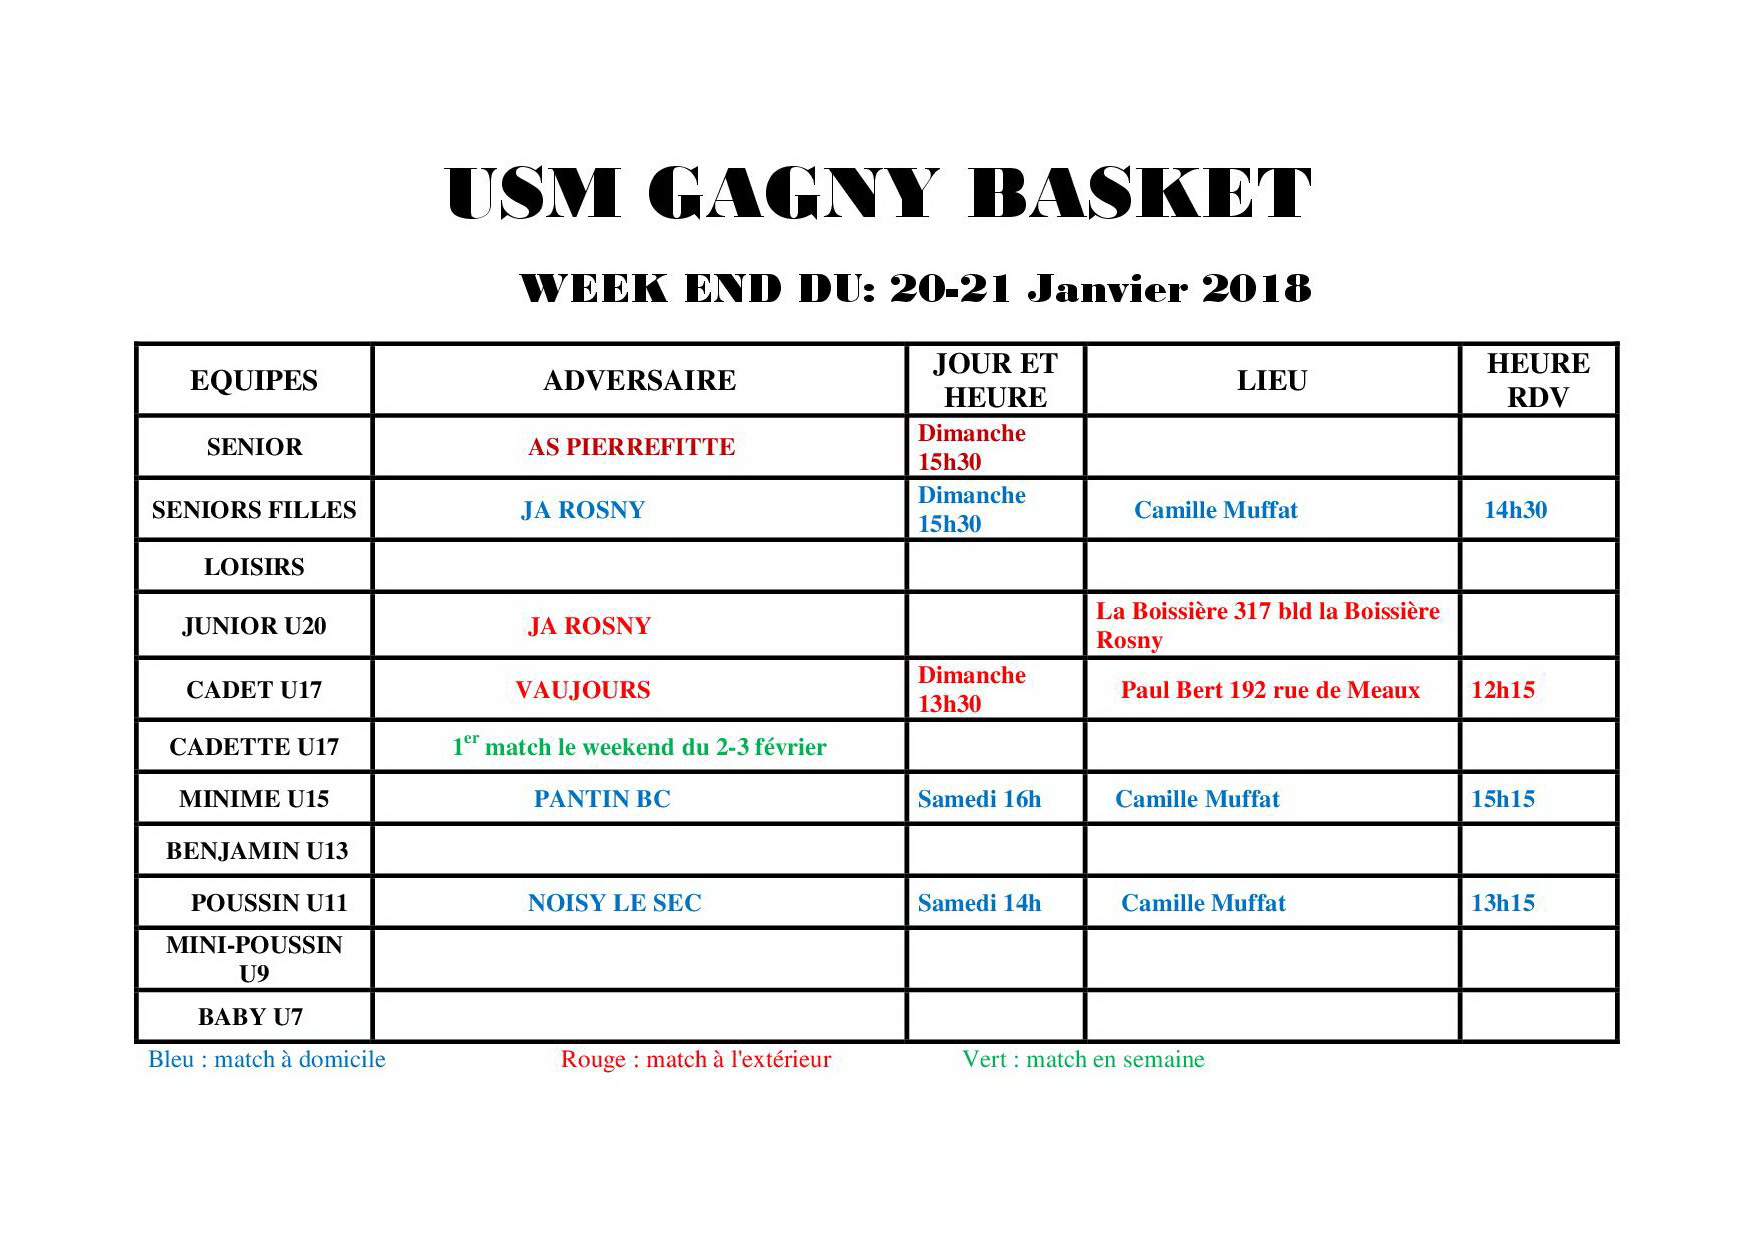 Usmg gagny planning week end 20 21 janvier 2018